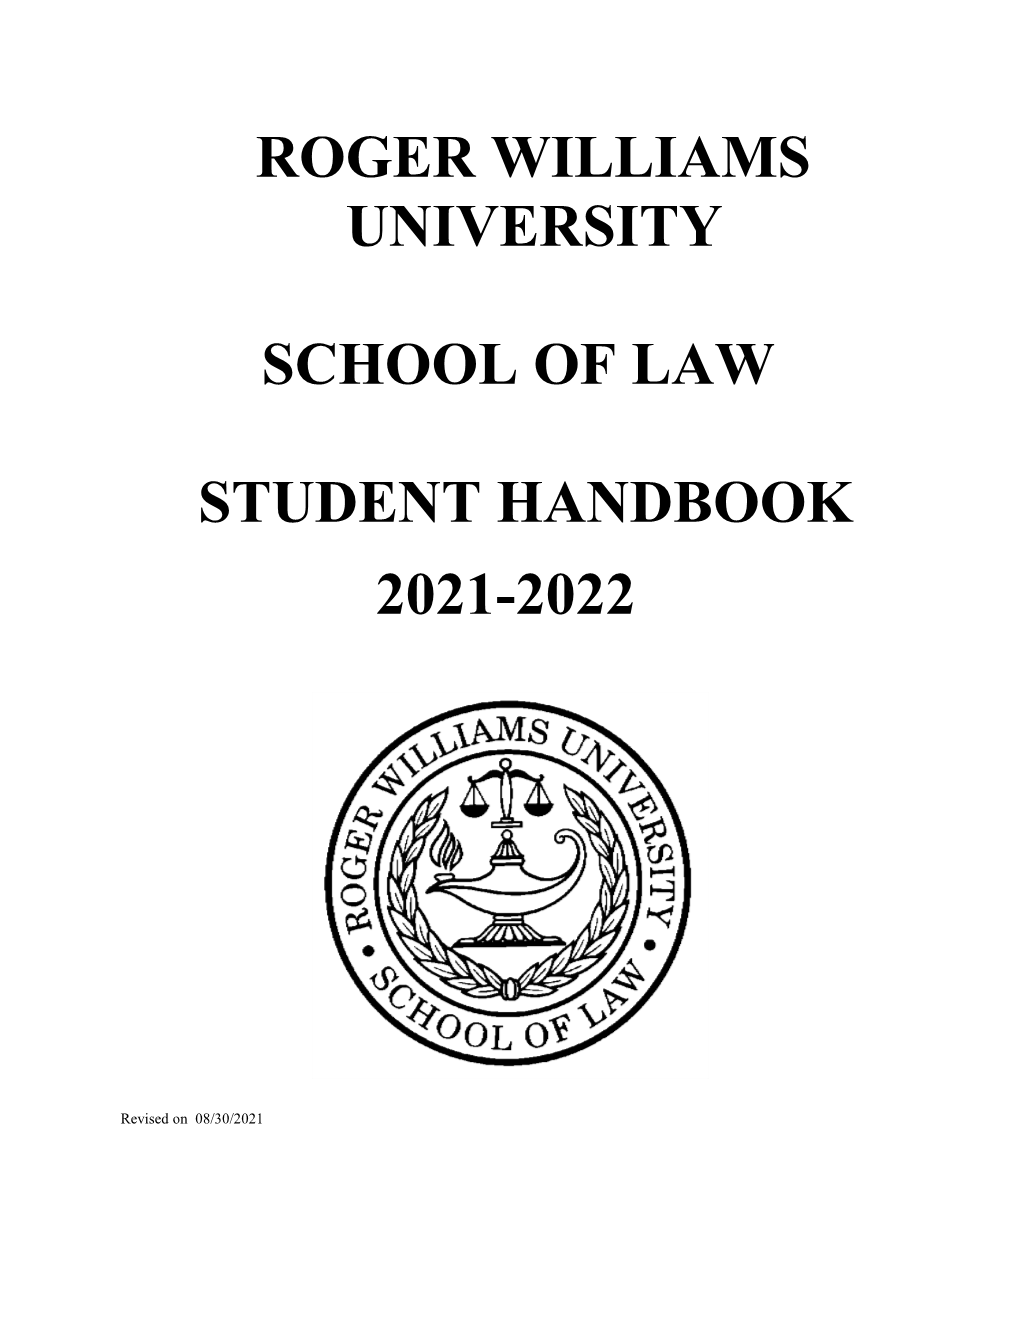 Roger Williams University School of Law Student Handbook 2021-2022